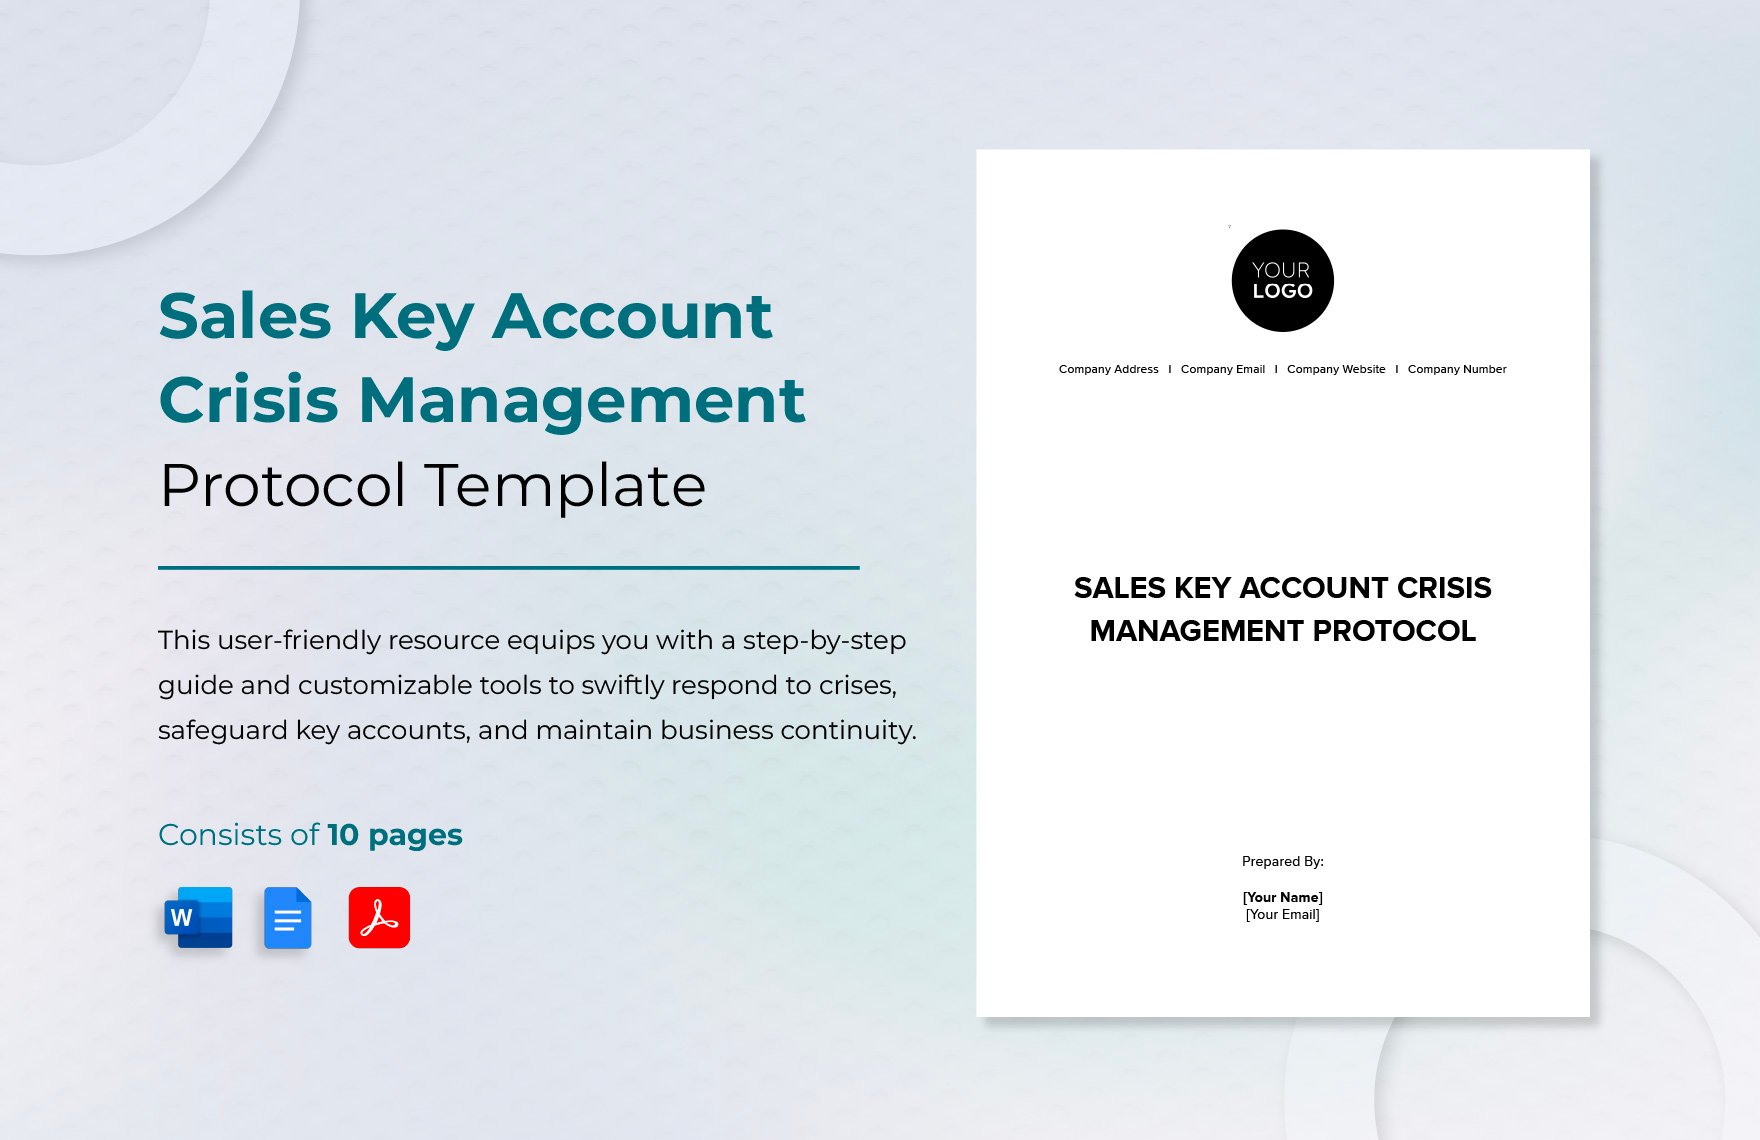 Sales Key Account Crisis Management Protocol Template